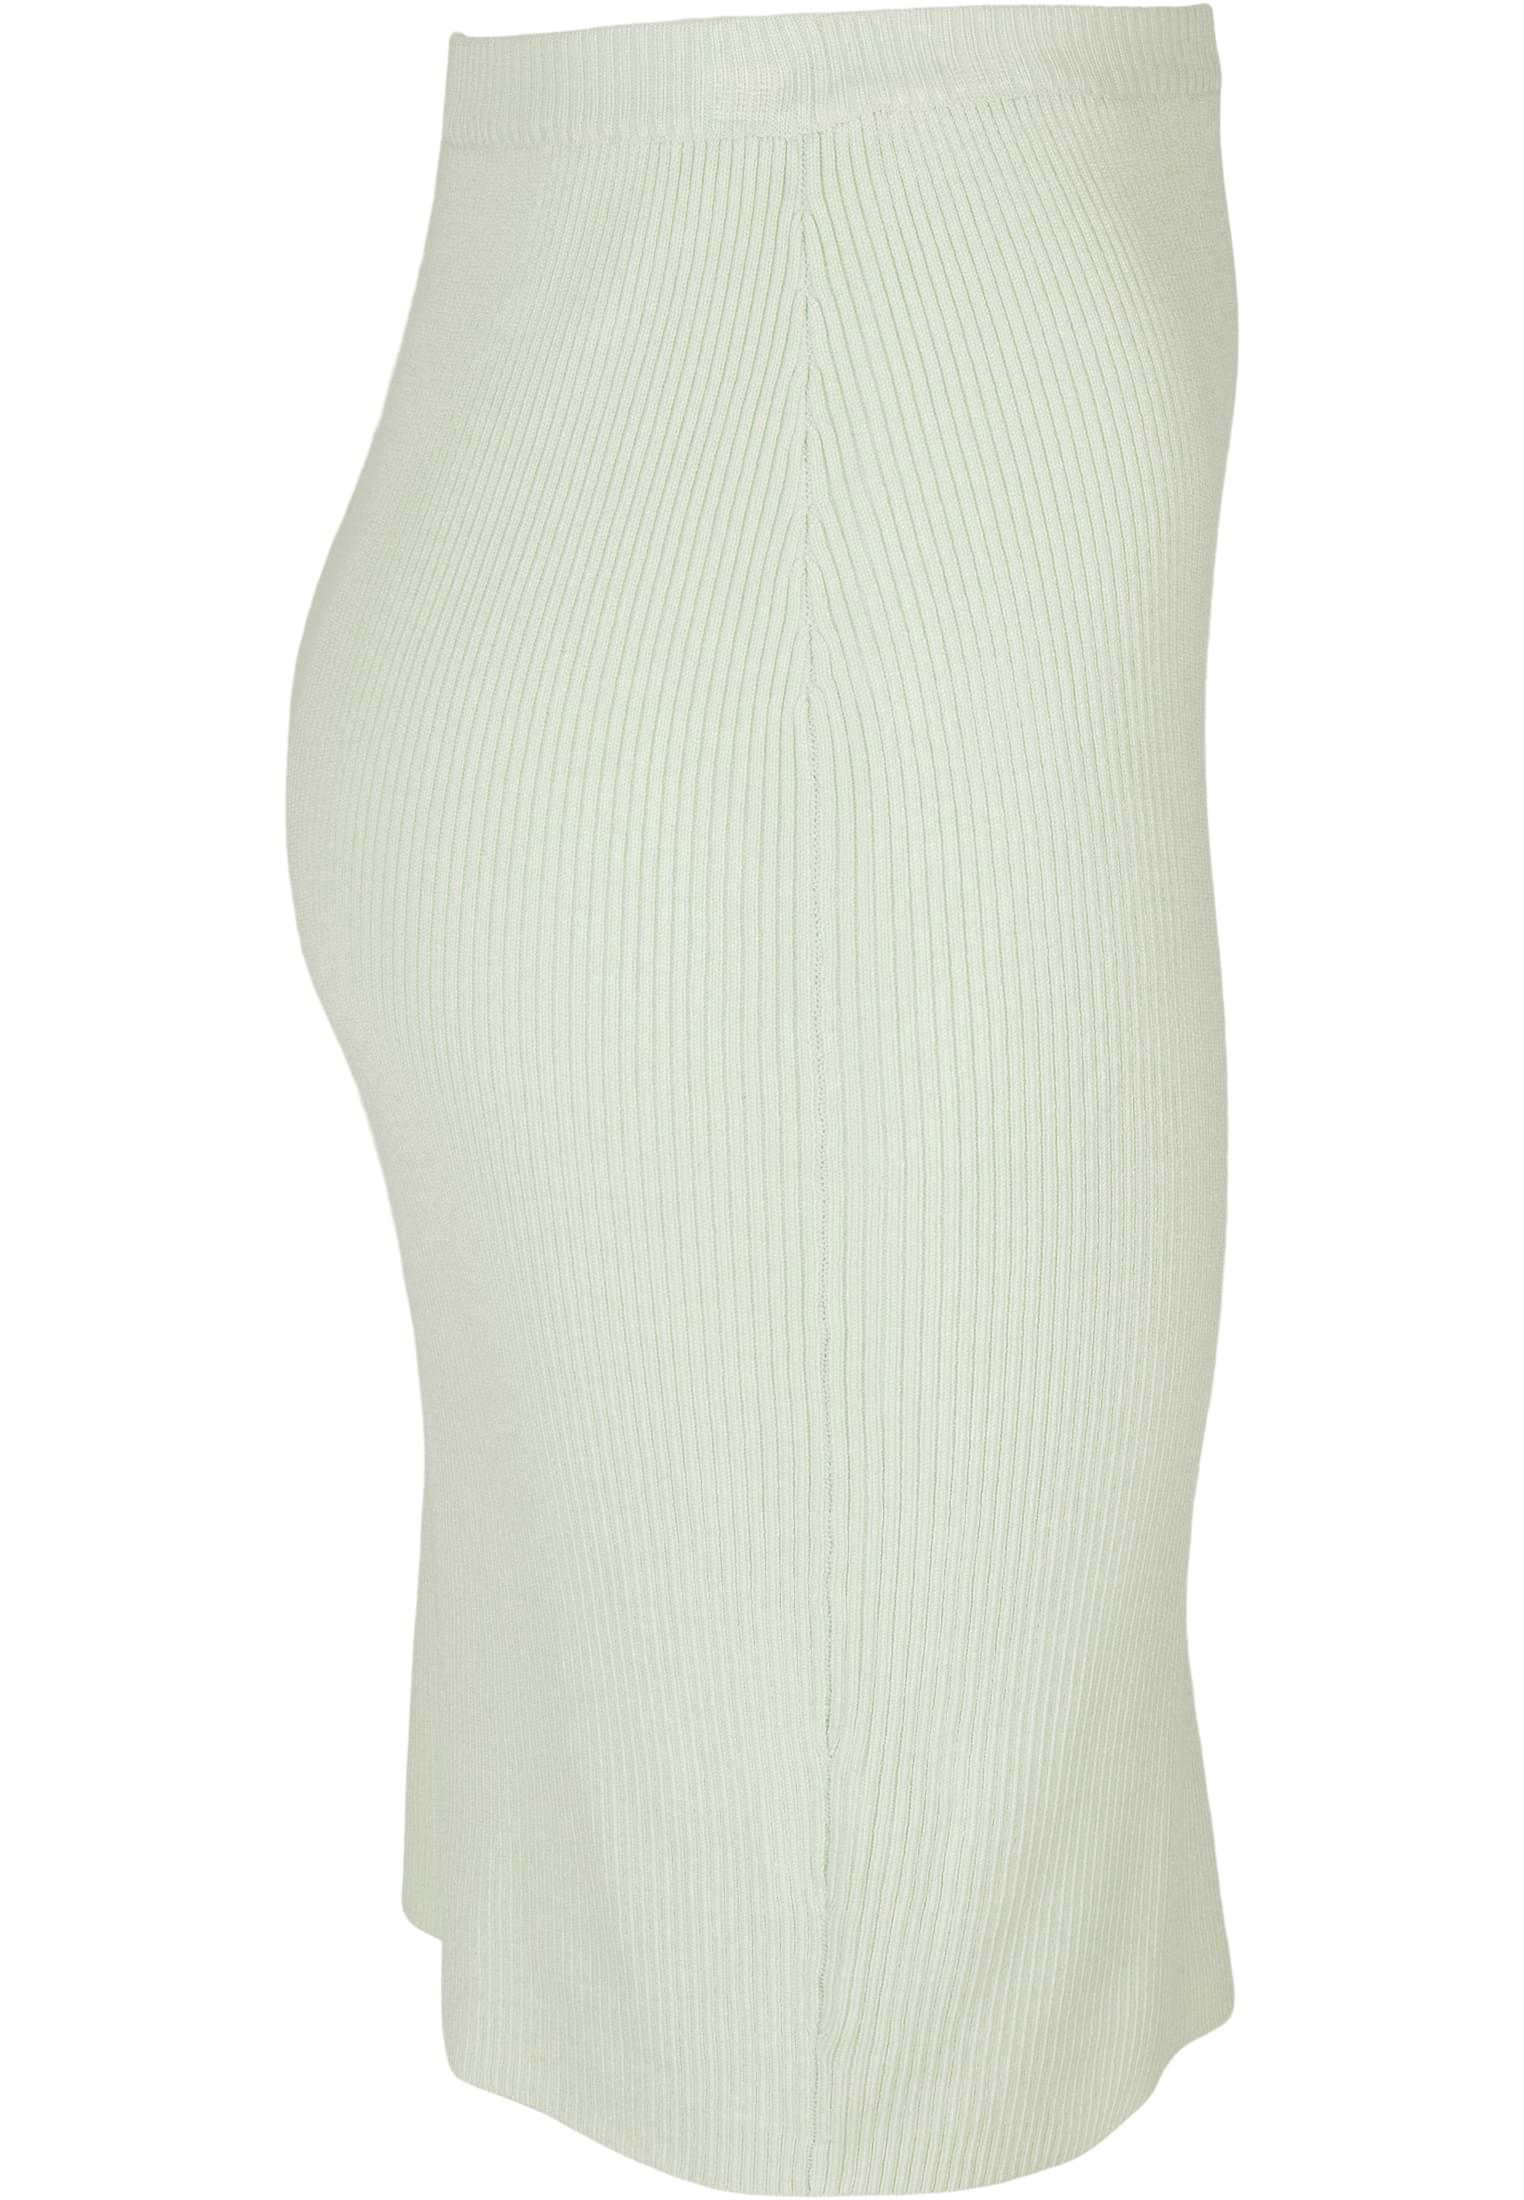 Kleider & R?cke Ladies Rib Knit Skirt in Farbe lightmint